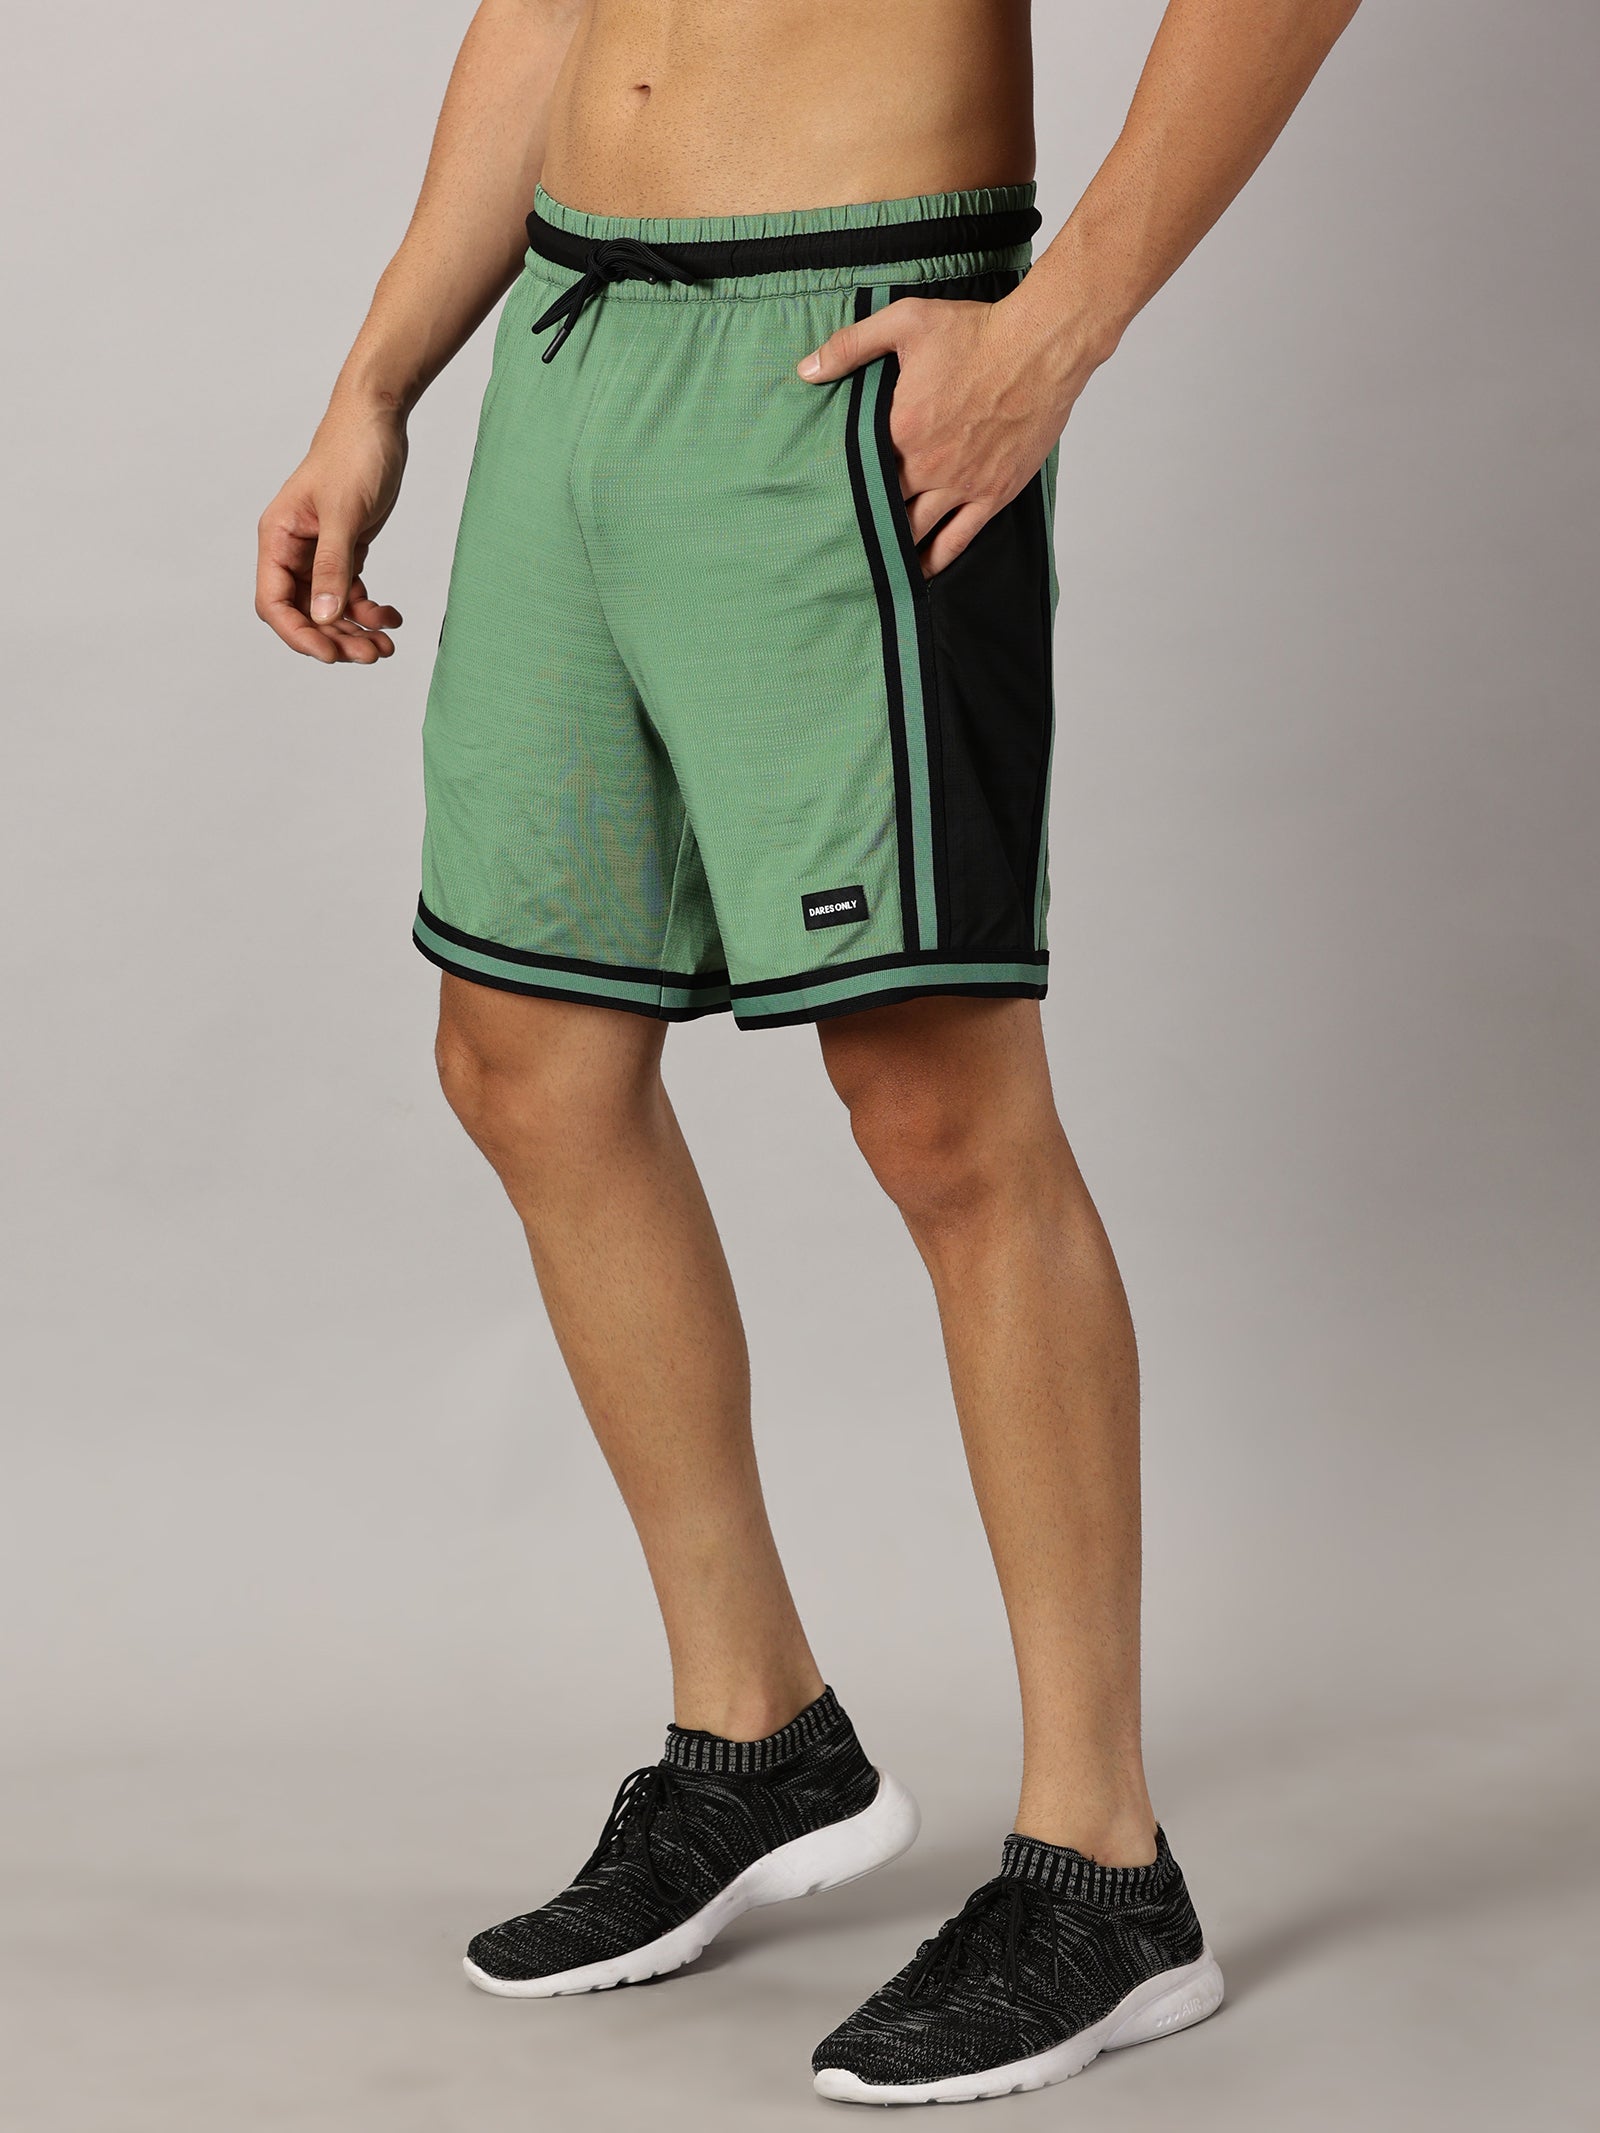 Defy Gravity Basketball shorts Avocado Green